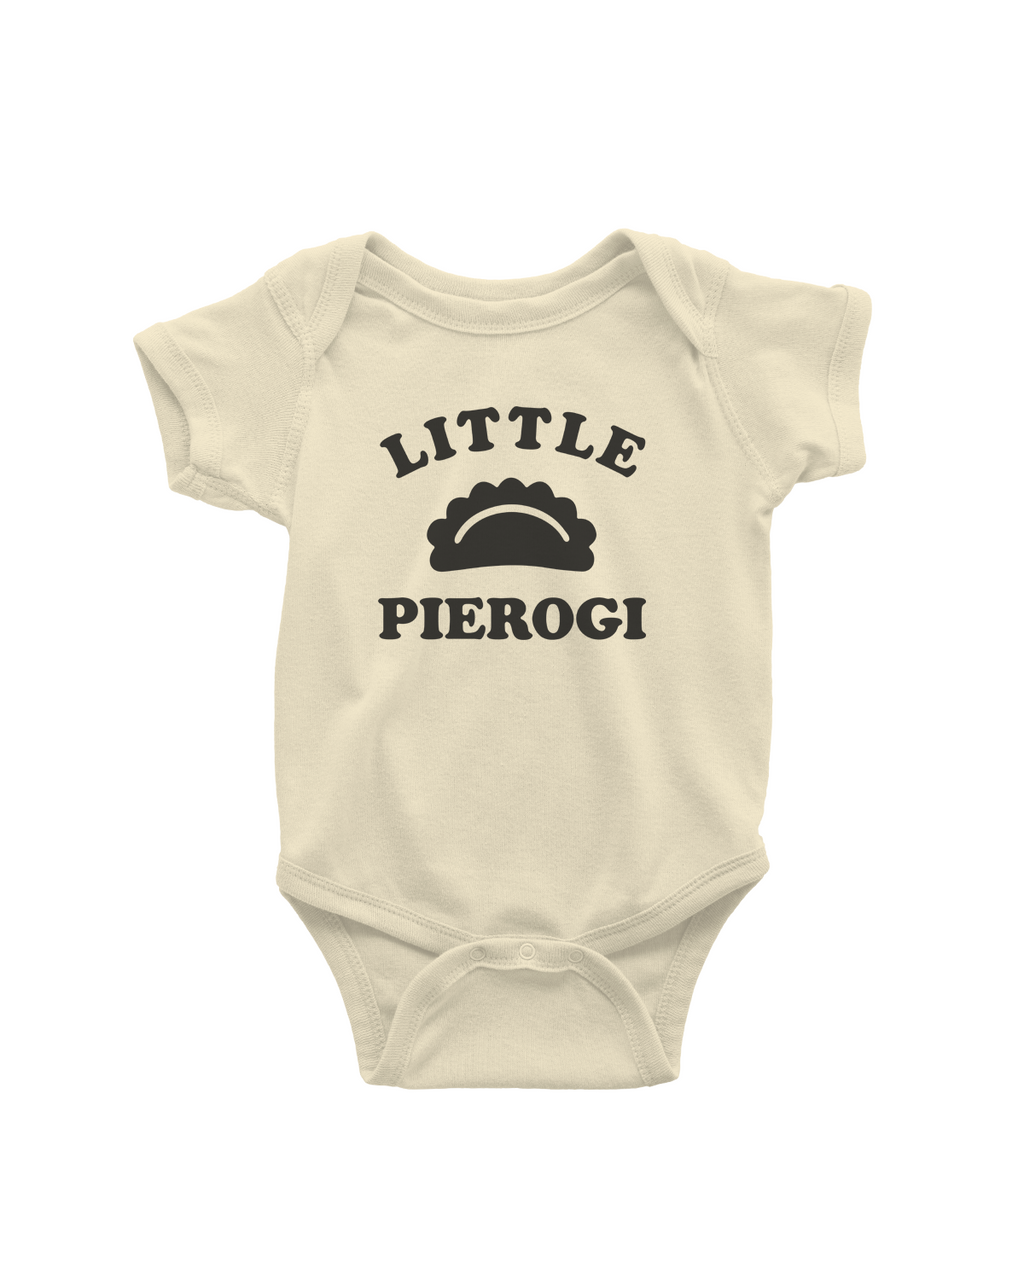 Little Pierogi Onesie, Steel City, Cute Babies Gifts